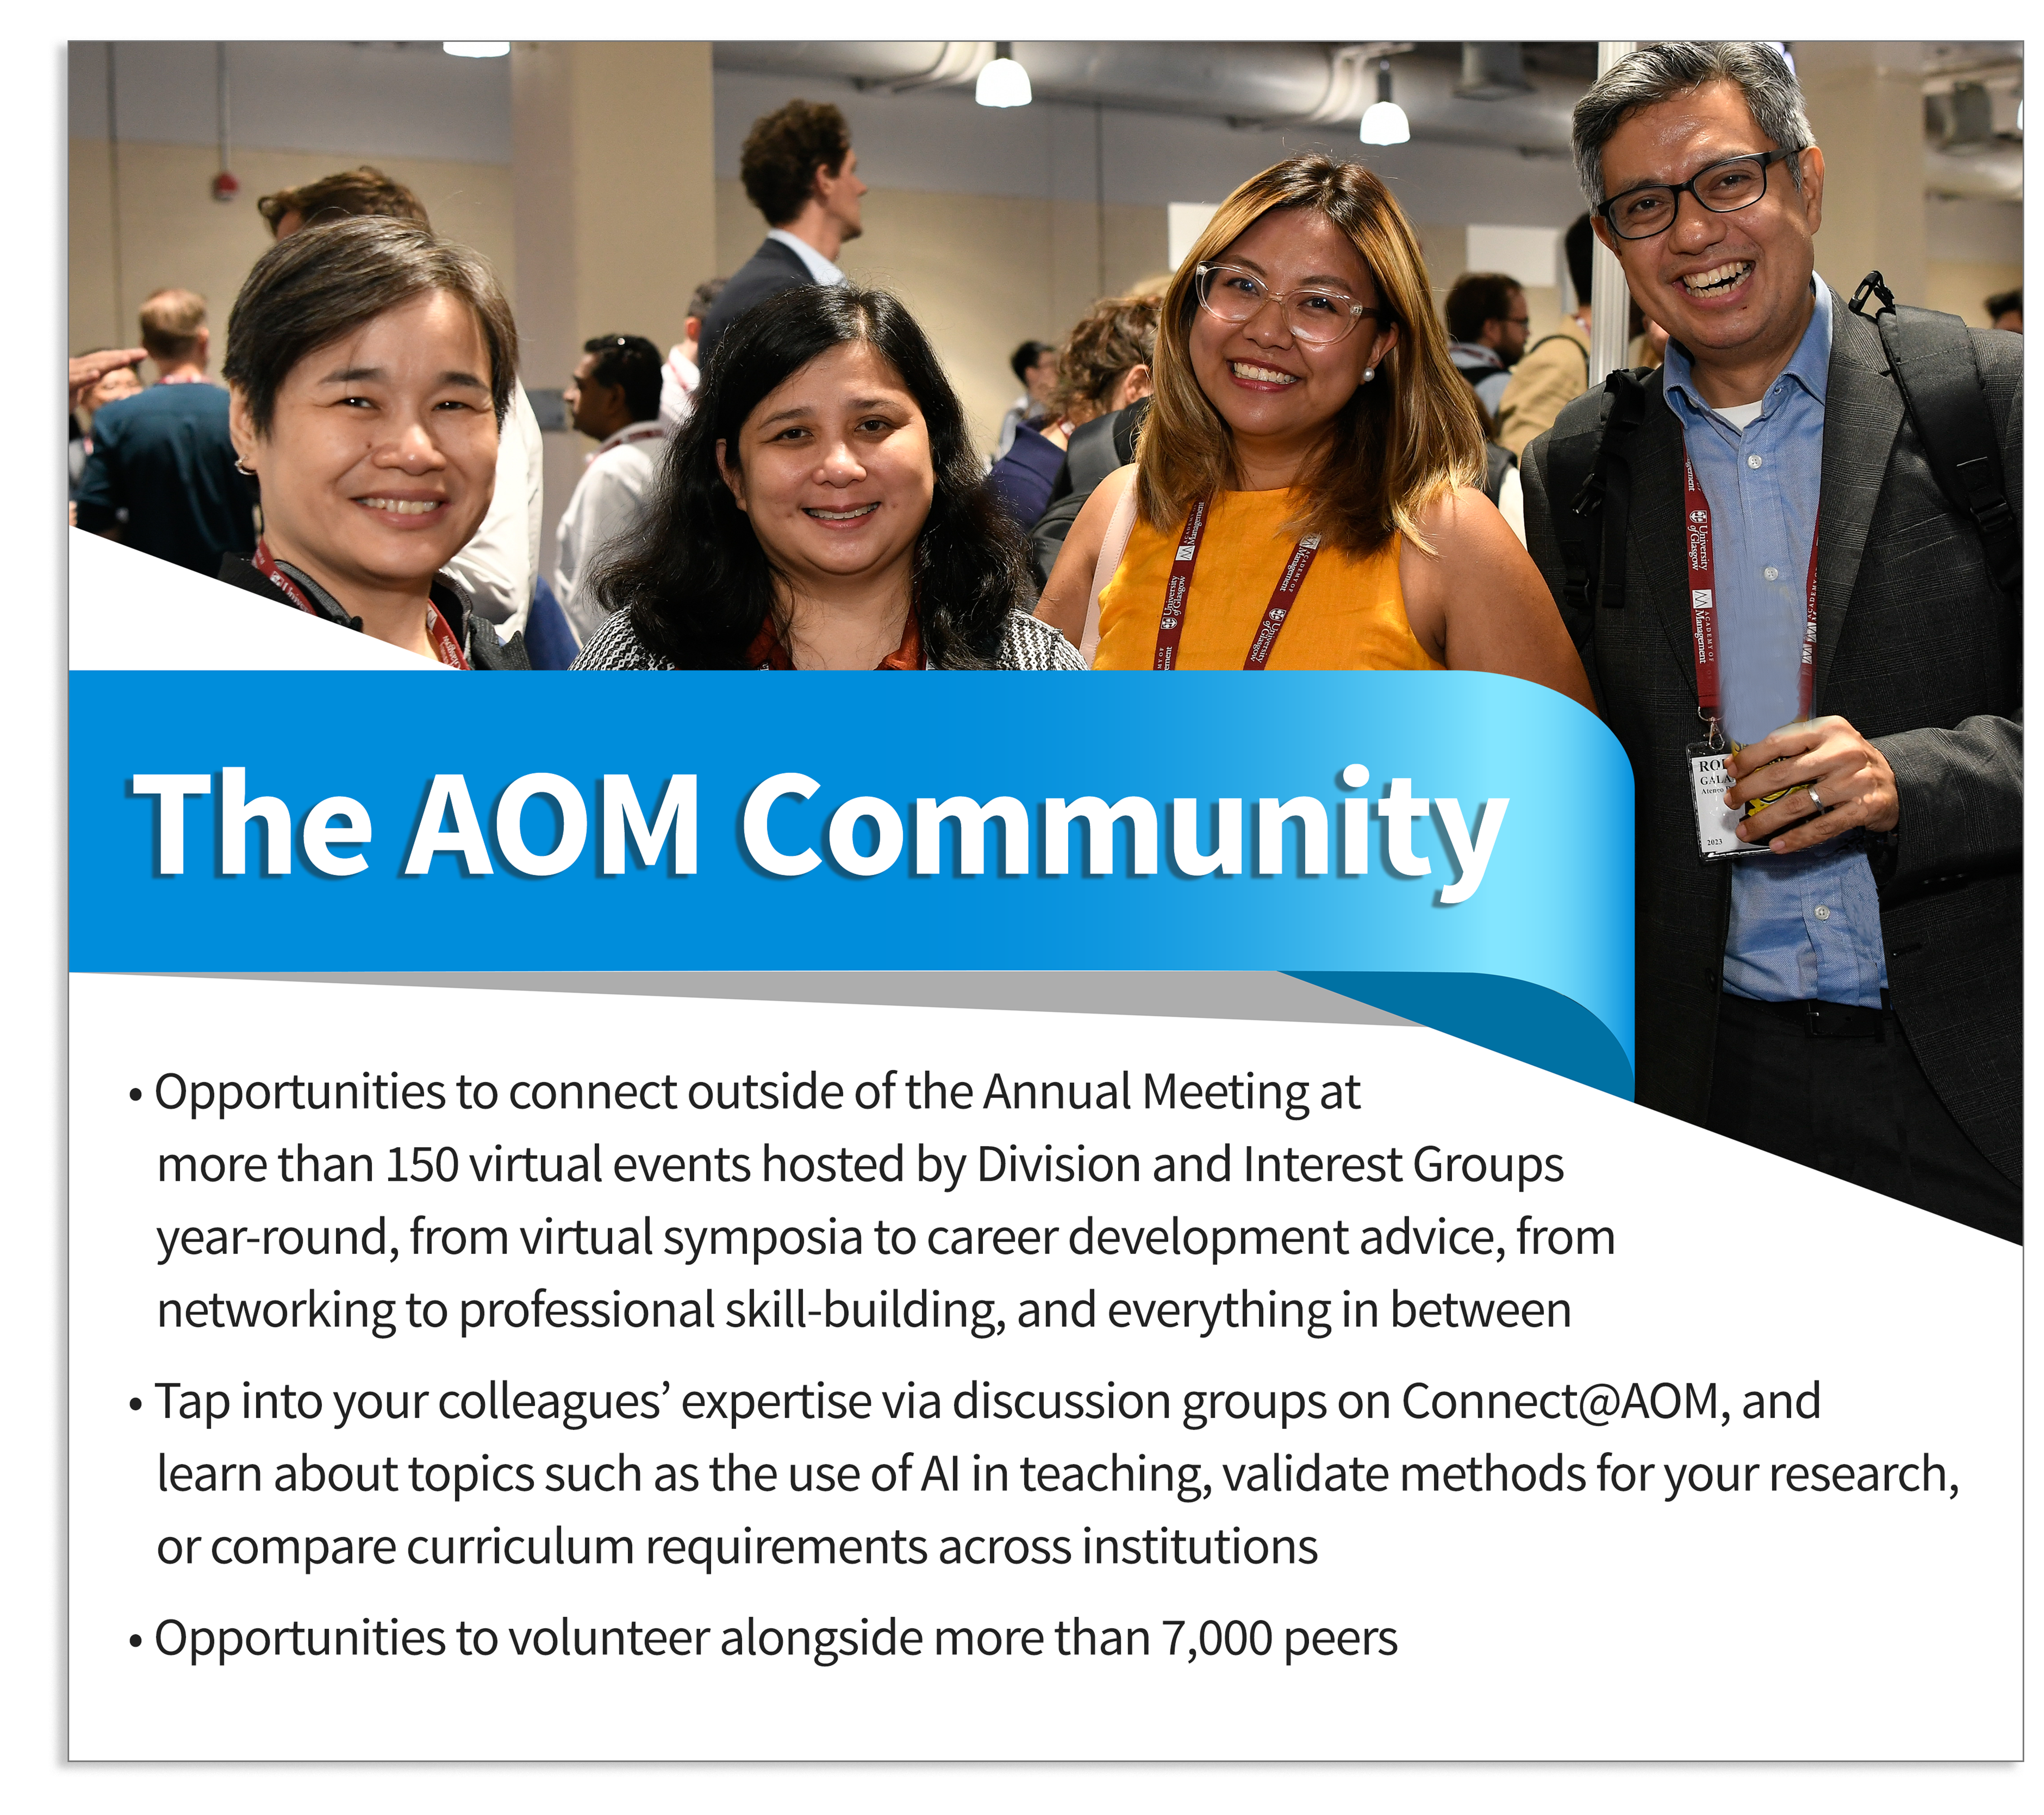 Community of AOM scholars gathered